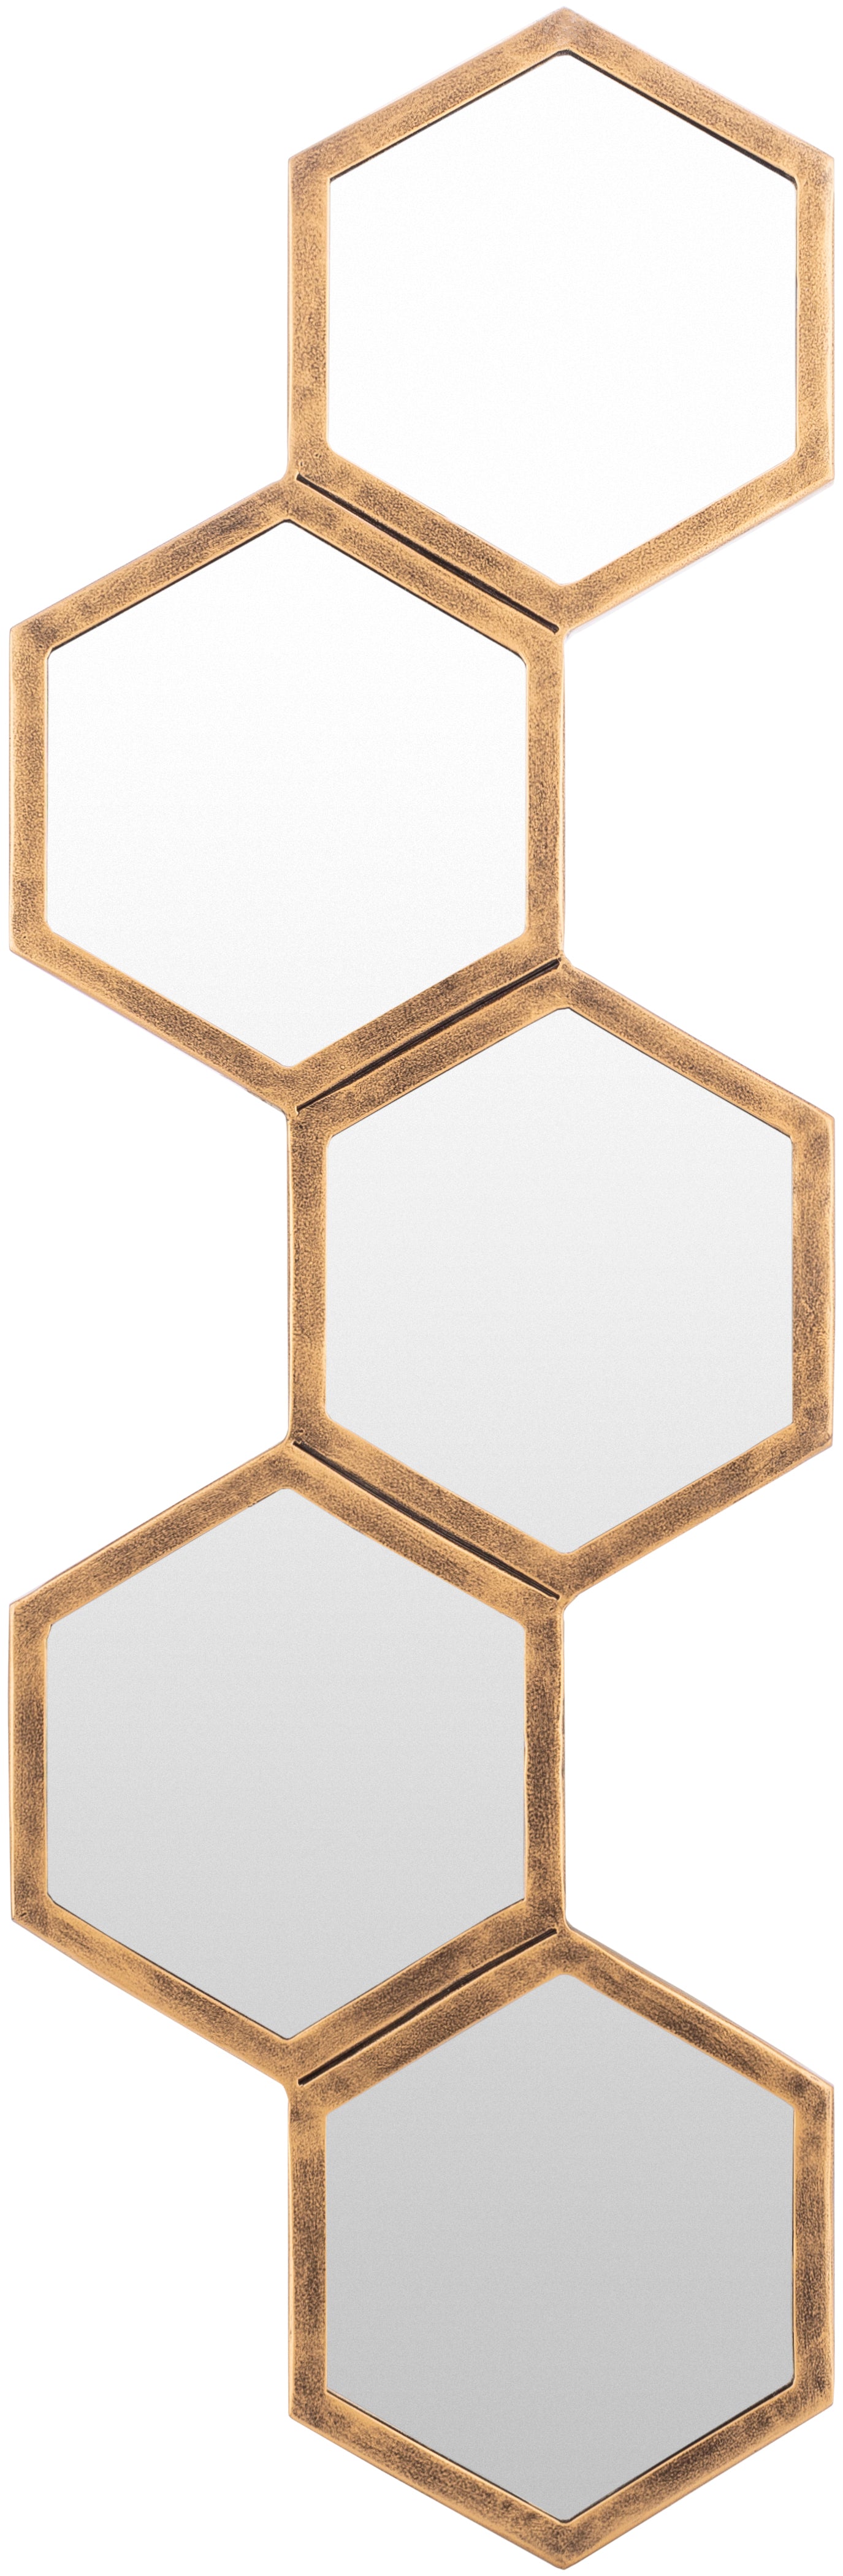 Honeycomb Mirror 1-Mirror-Livabliss-Wall2Wall Furnishings